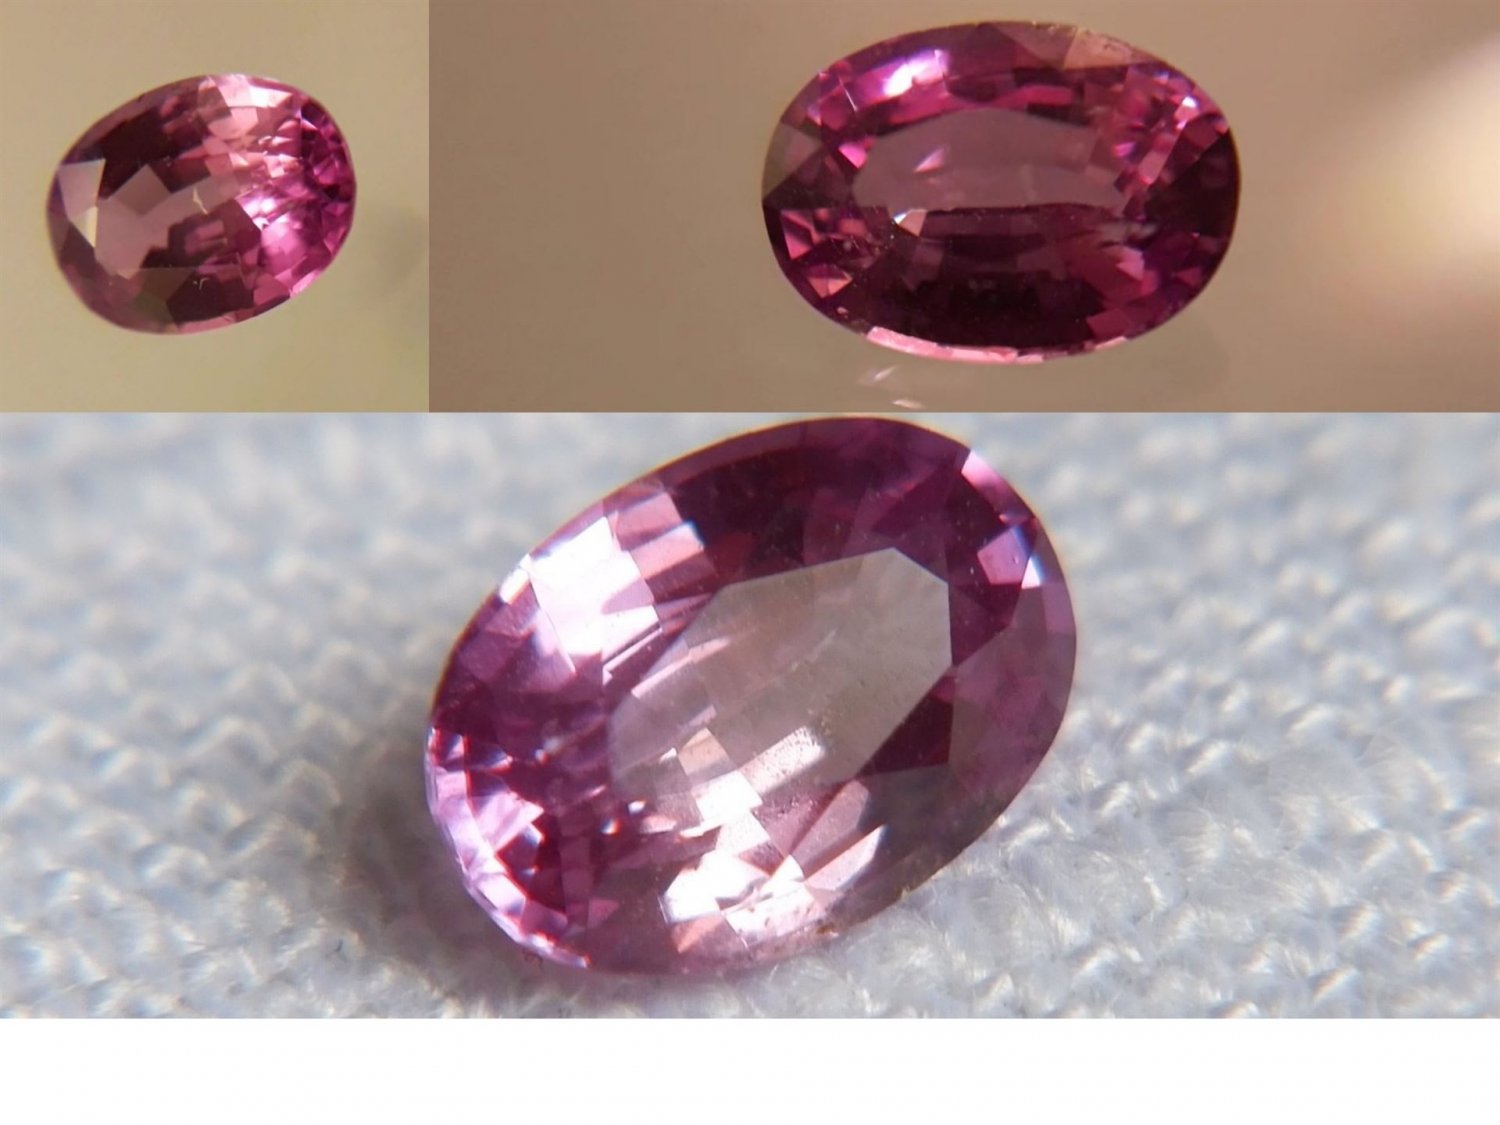 0.65 ct GIA purplish pink Sapphire/Ruby, GIA Premium handcrafted oval cut Sri Lanka